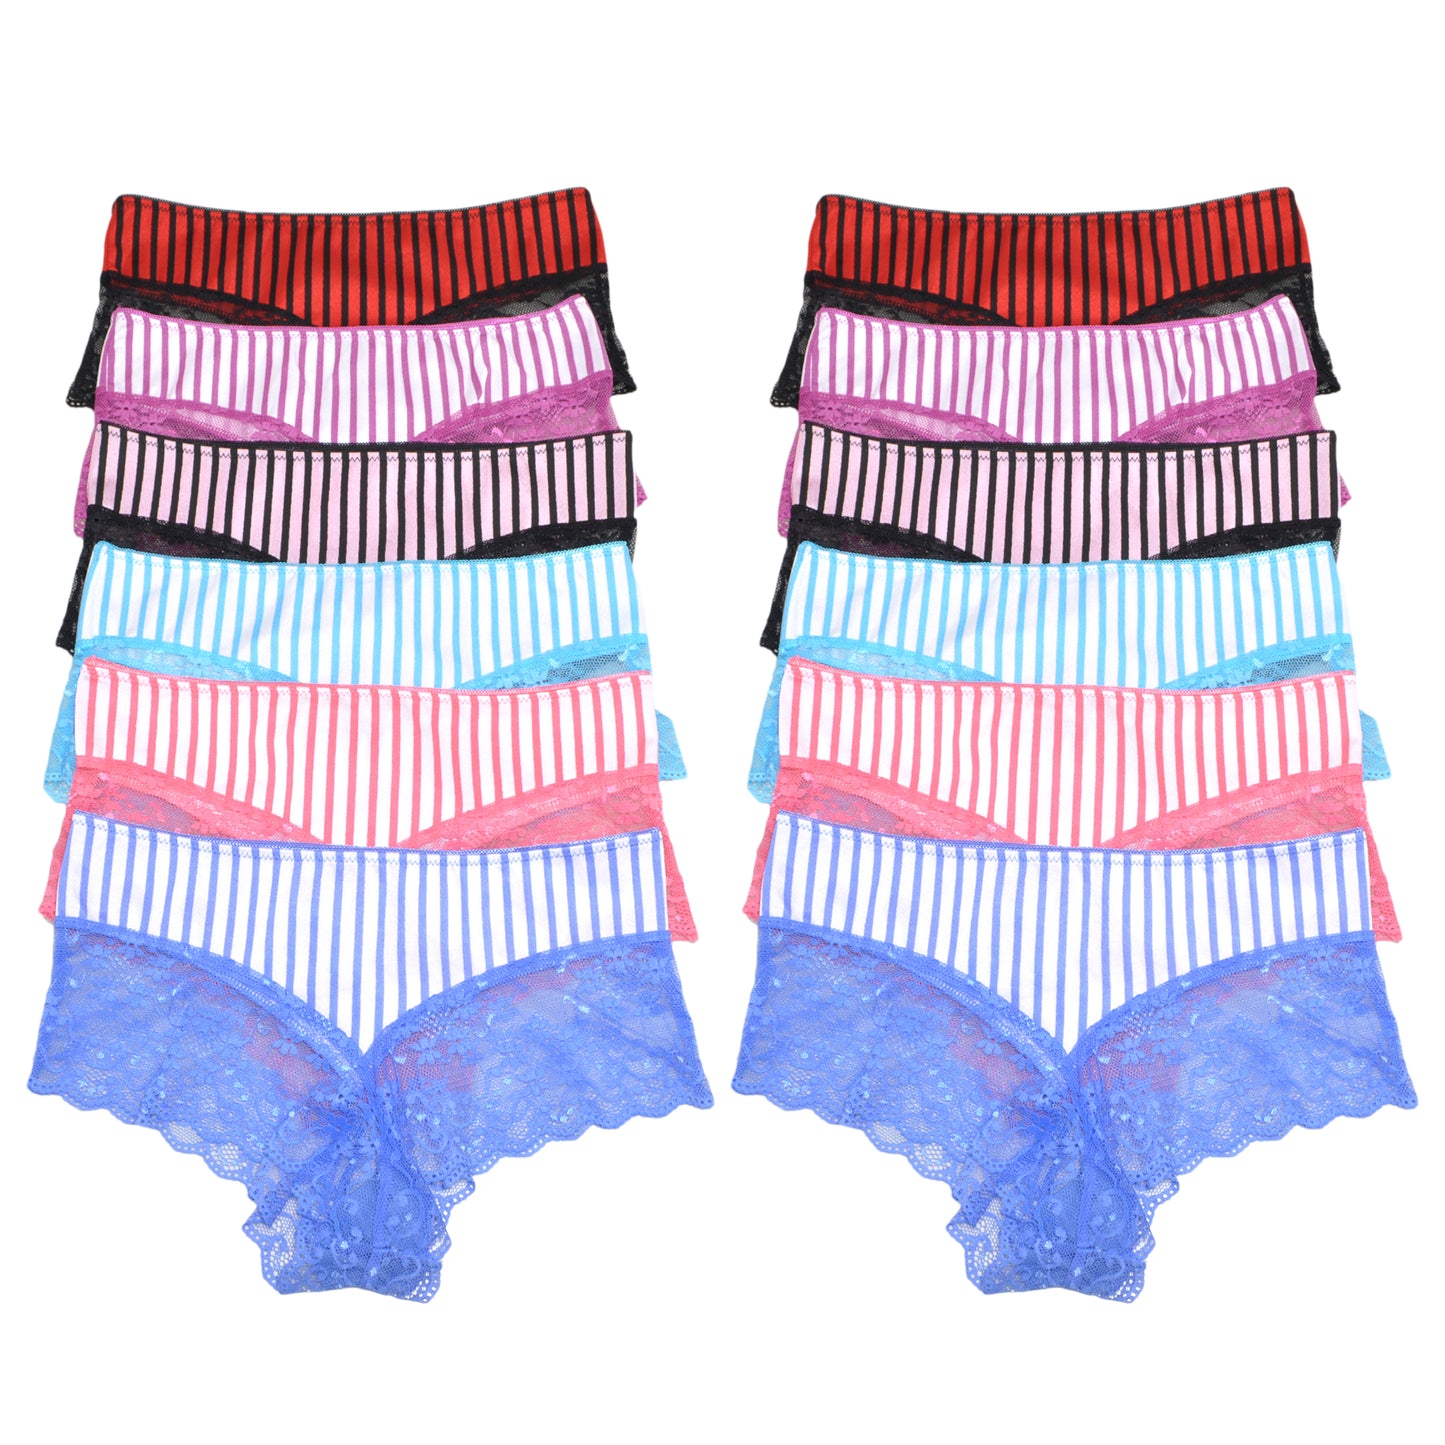 Angelina Matching Cheeky Bikini Panties with Stripe Print Design (6 or 12 Pack), #B990